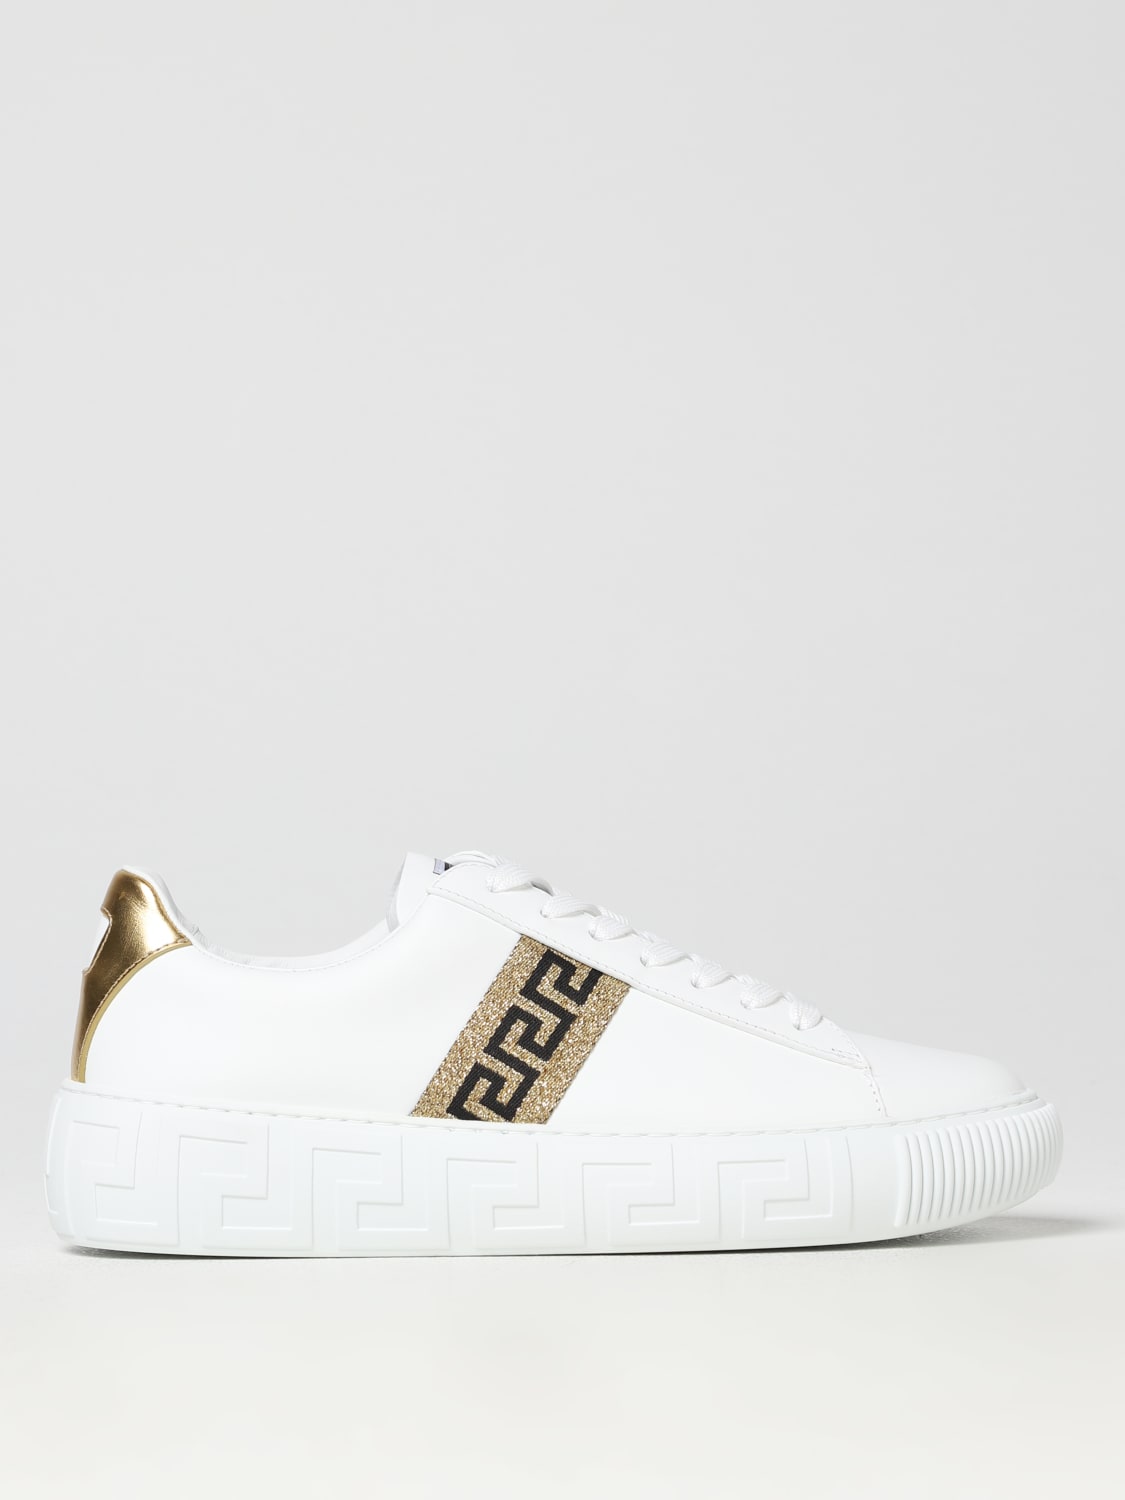 VERSACE: Greca sneakers in leather - White | Versace sneakers ...